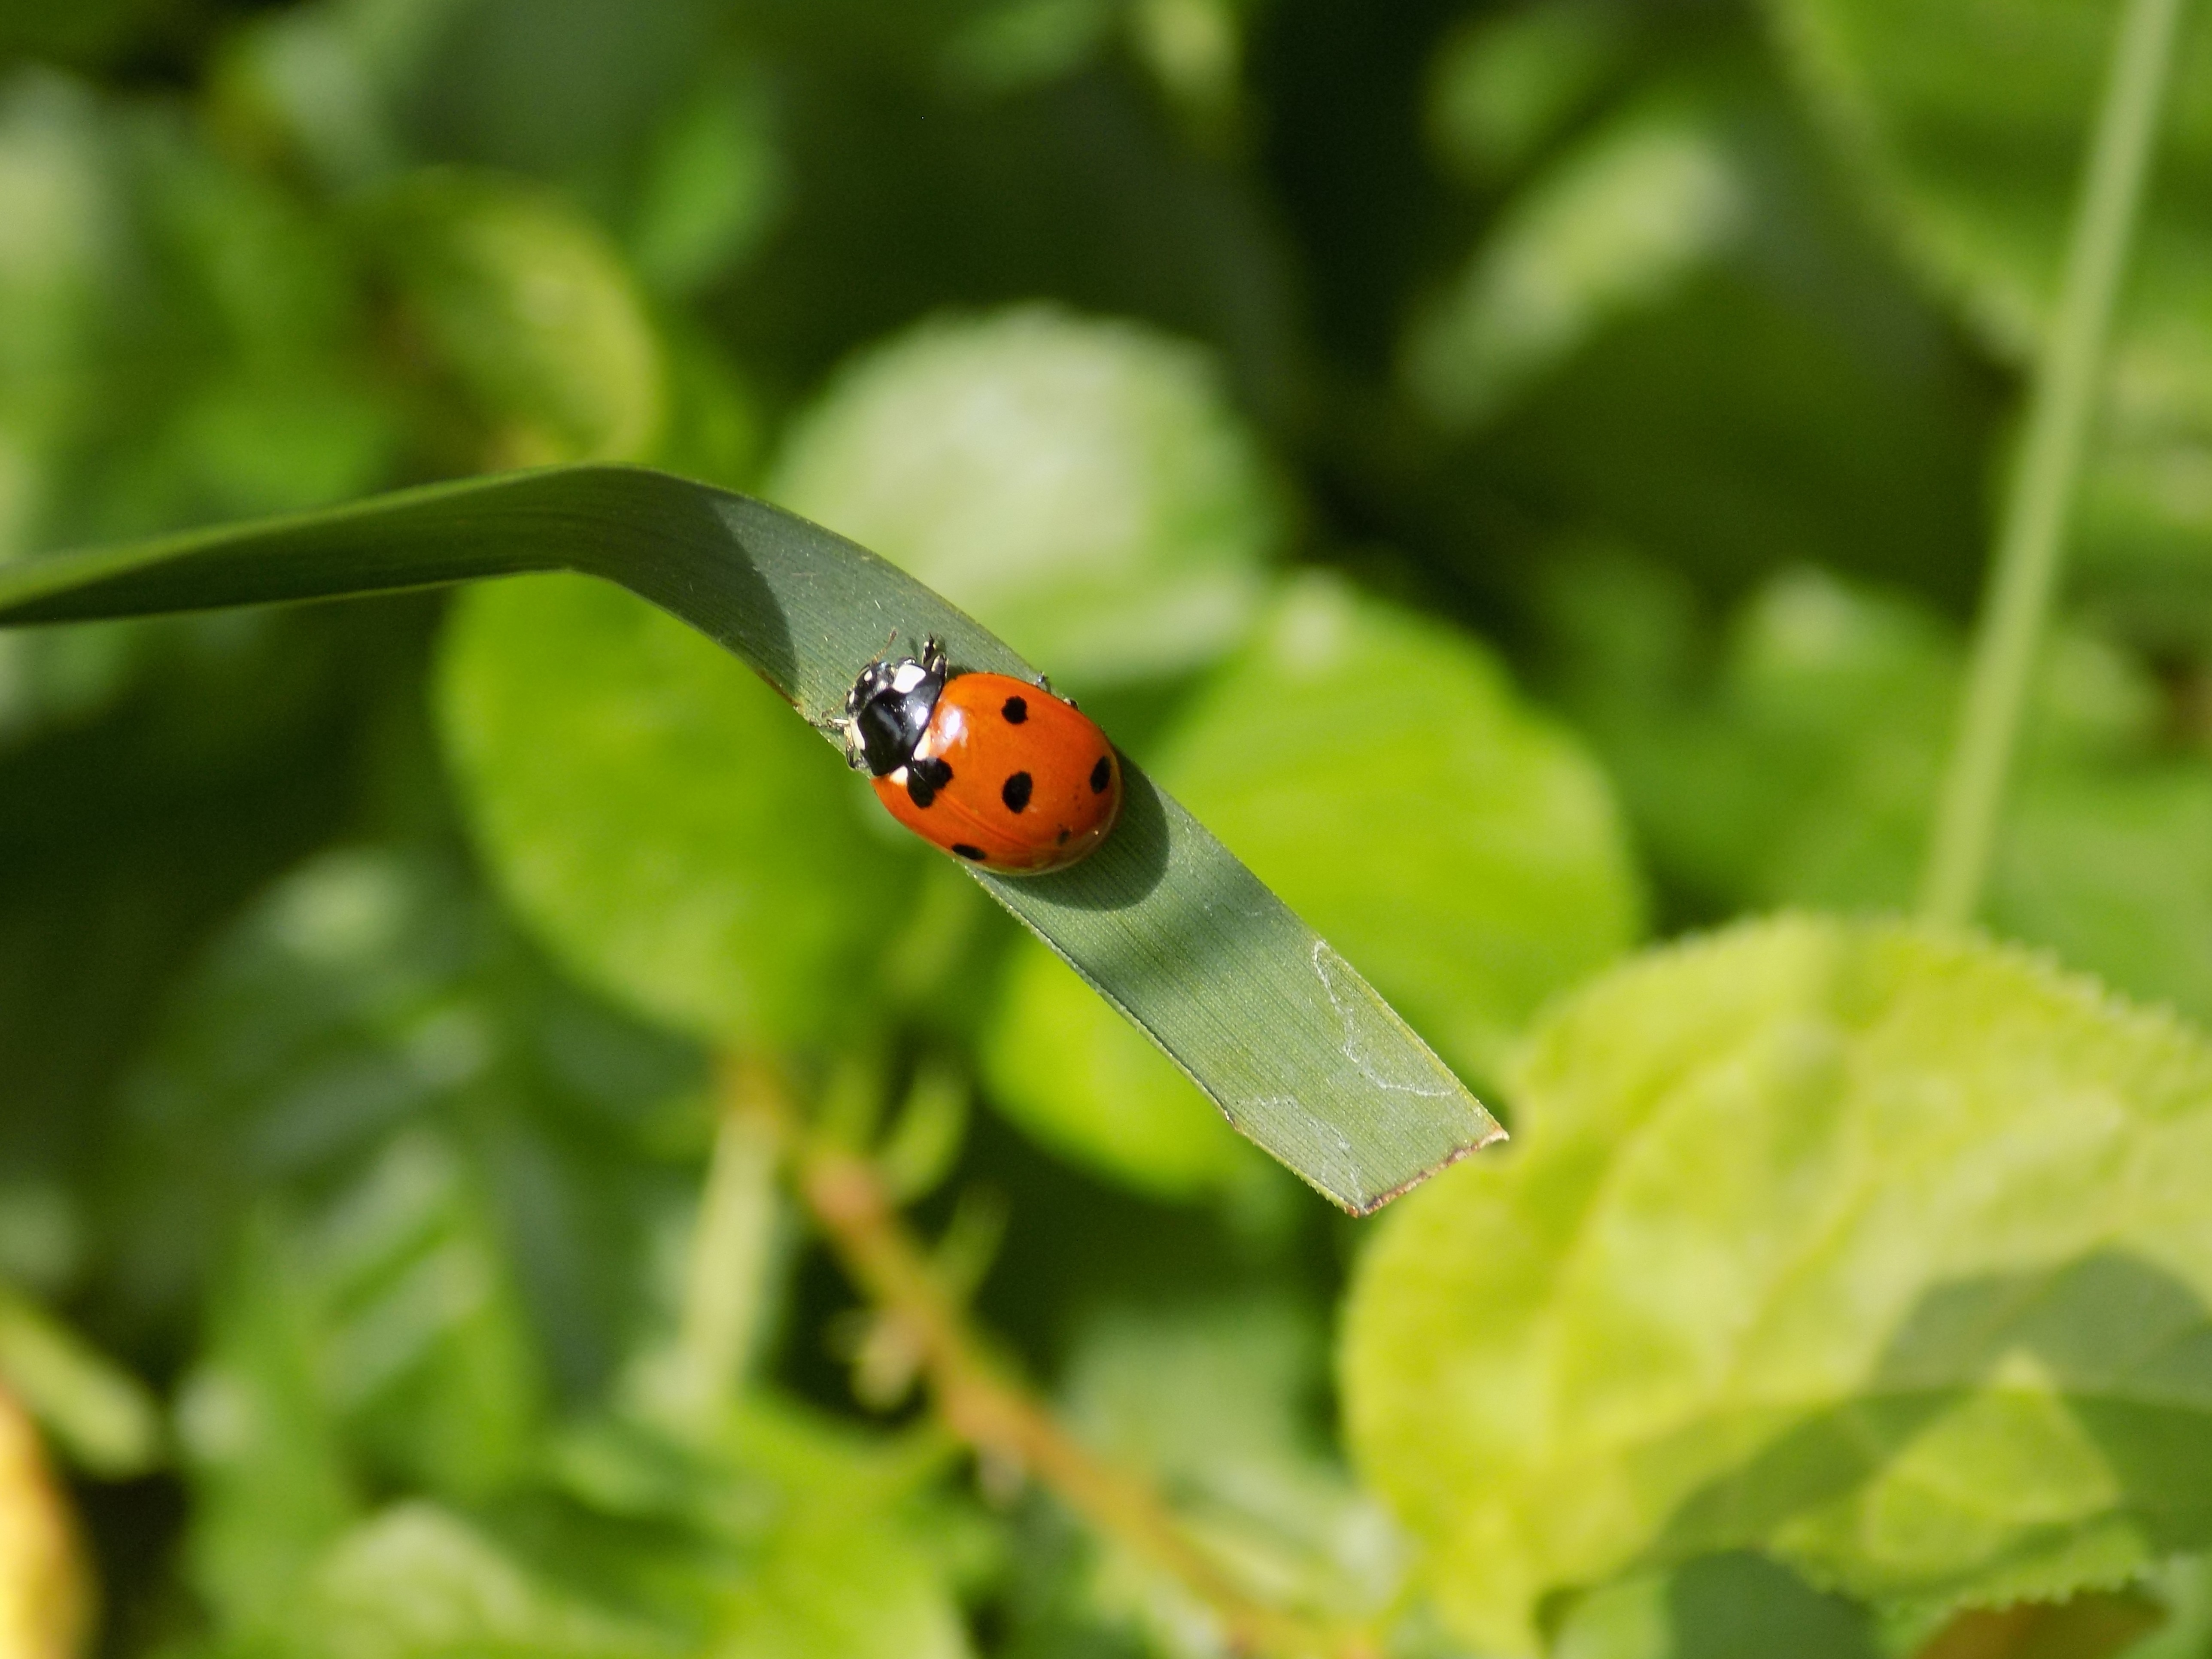 Closeup, Ladybug, Green, one animal, insect